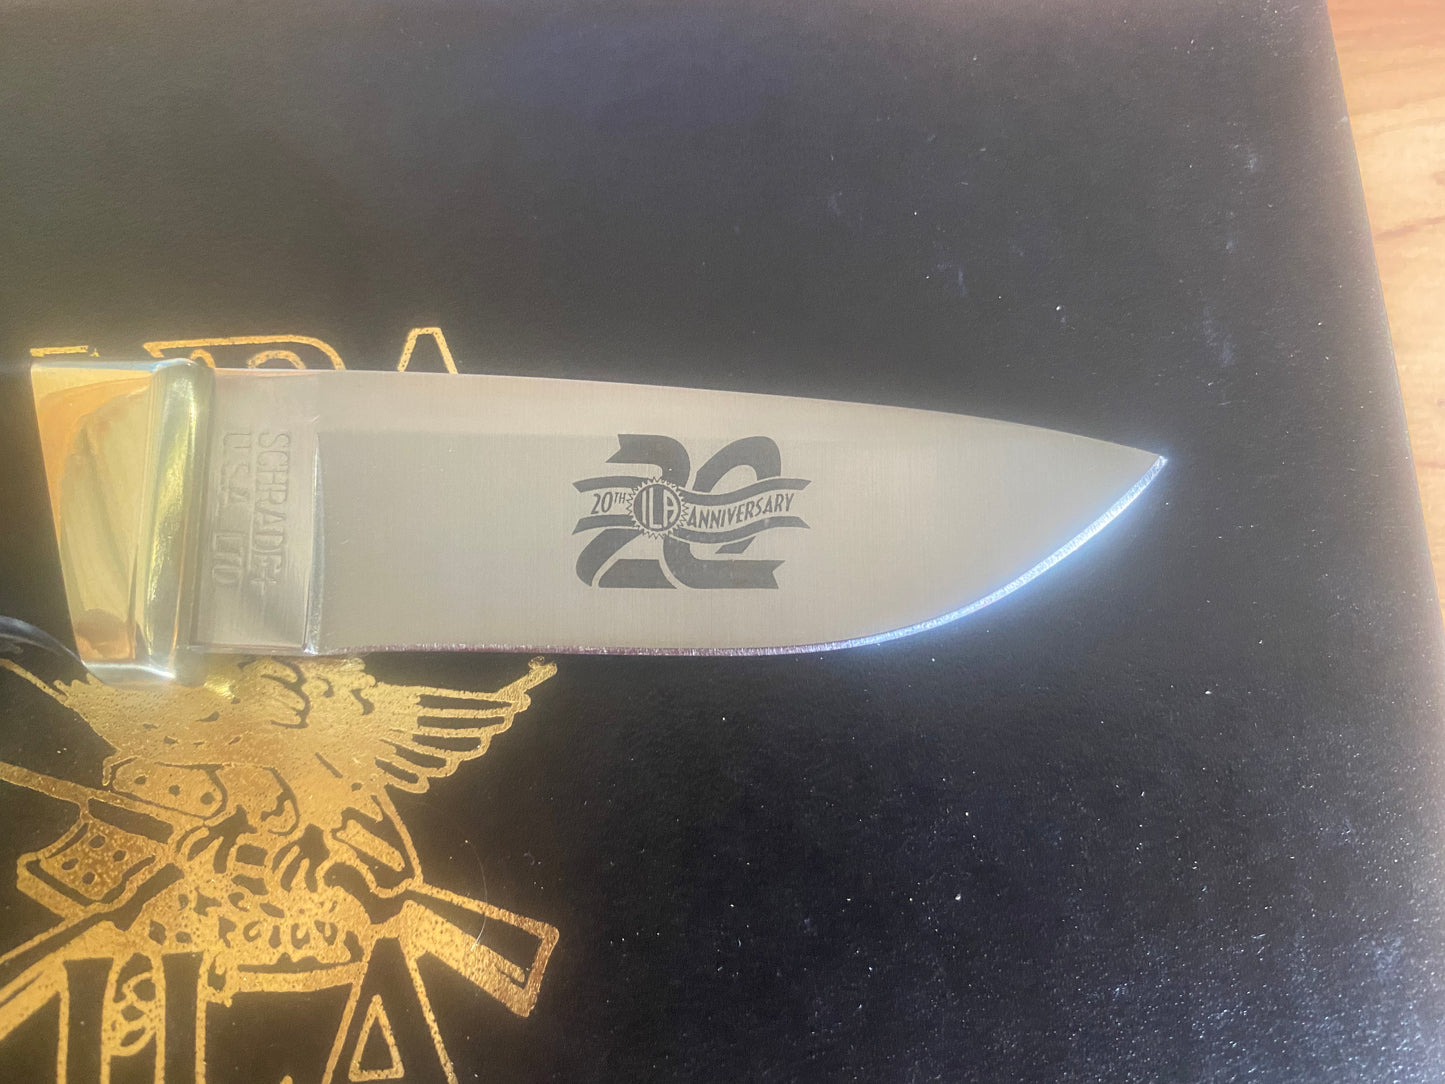 USA Made Schrade  LTD ILA 20th Anniversary Sheath Knife